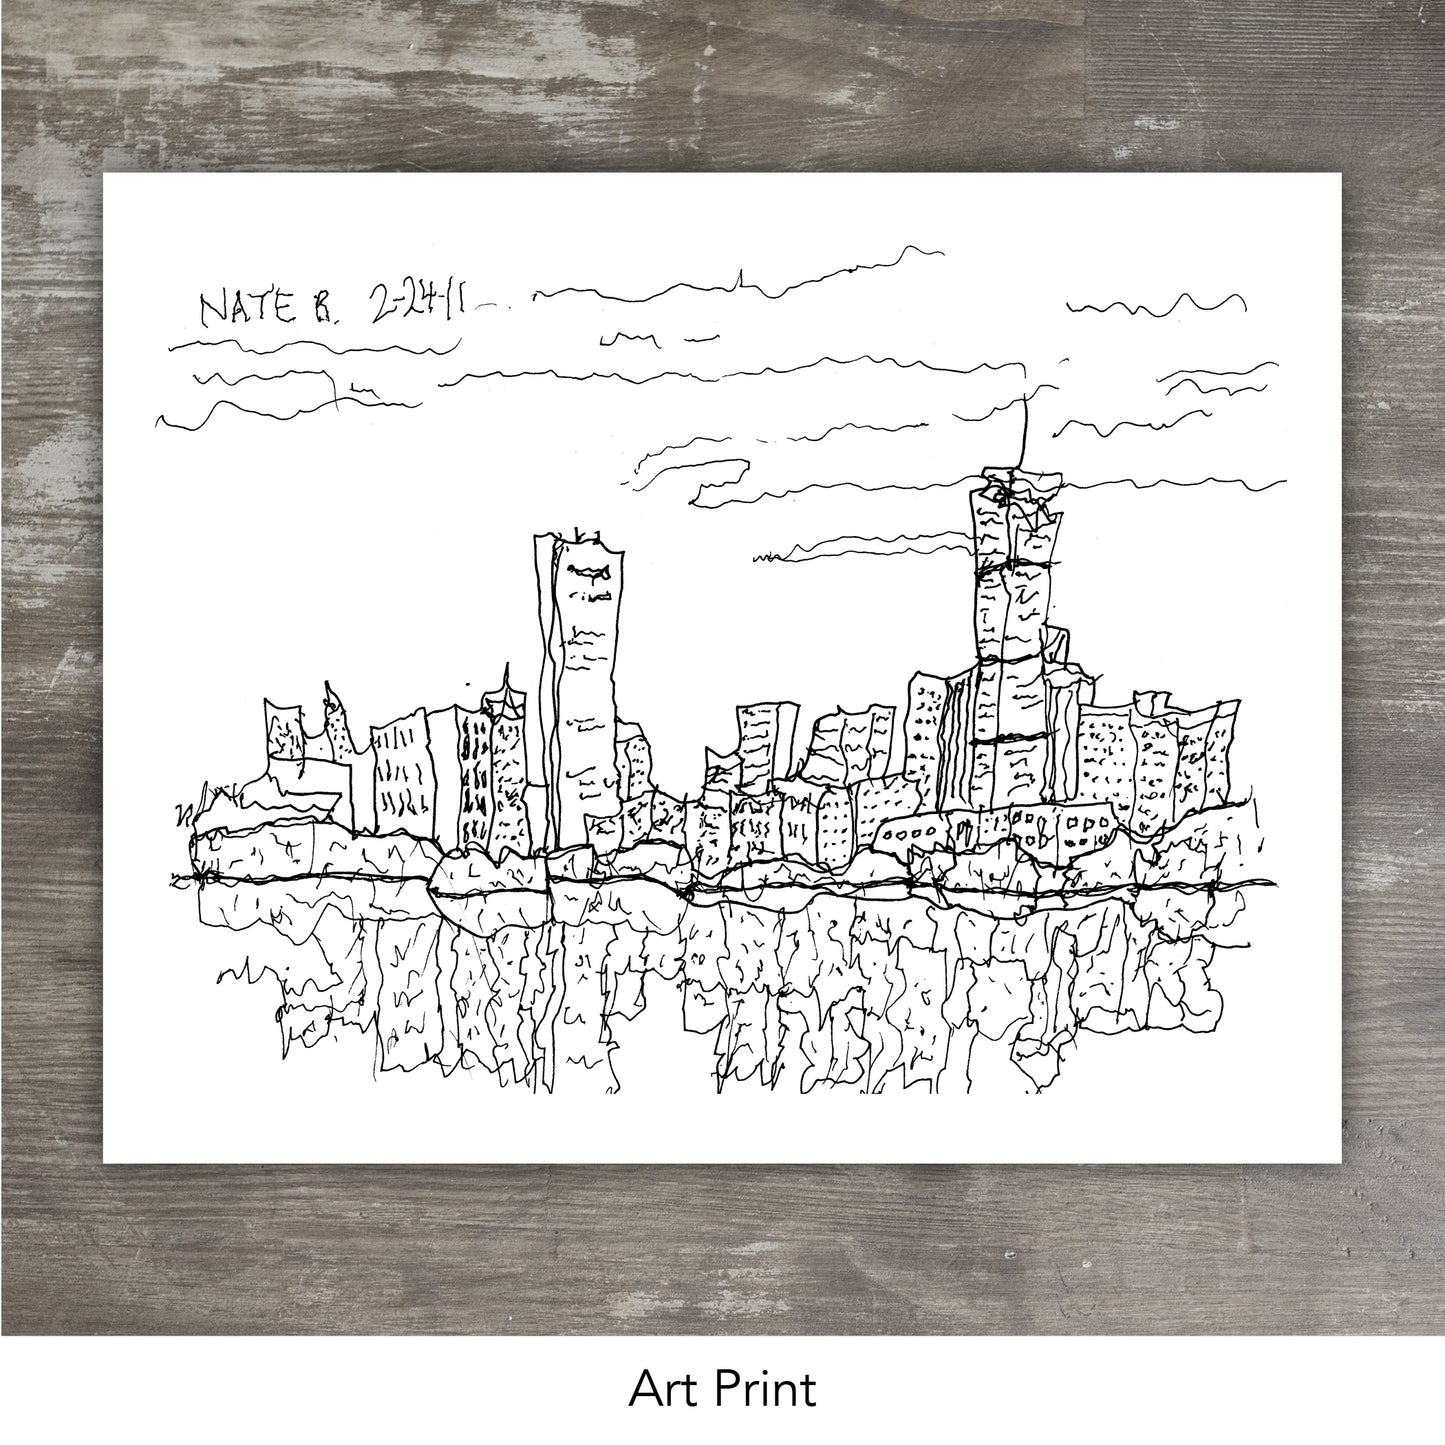 BOSTON SKYLINE // Ink & Watercolor